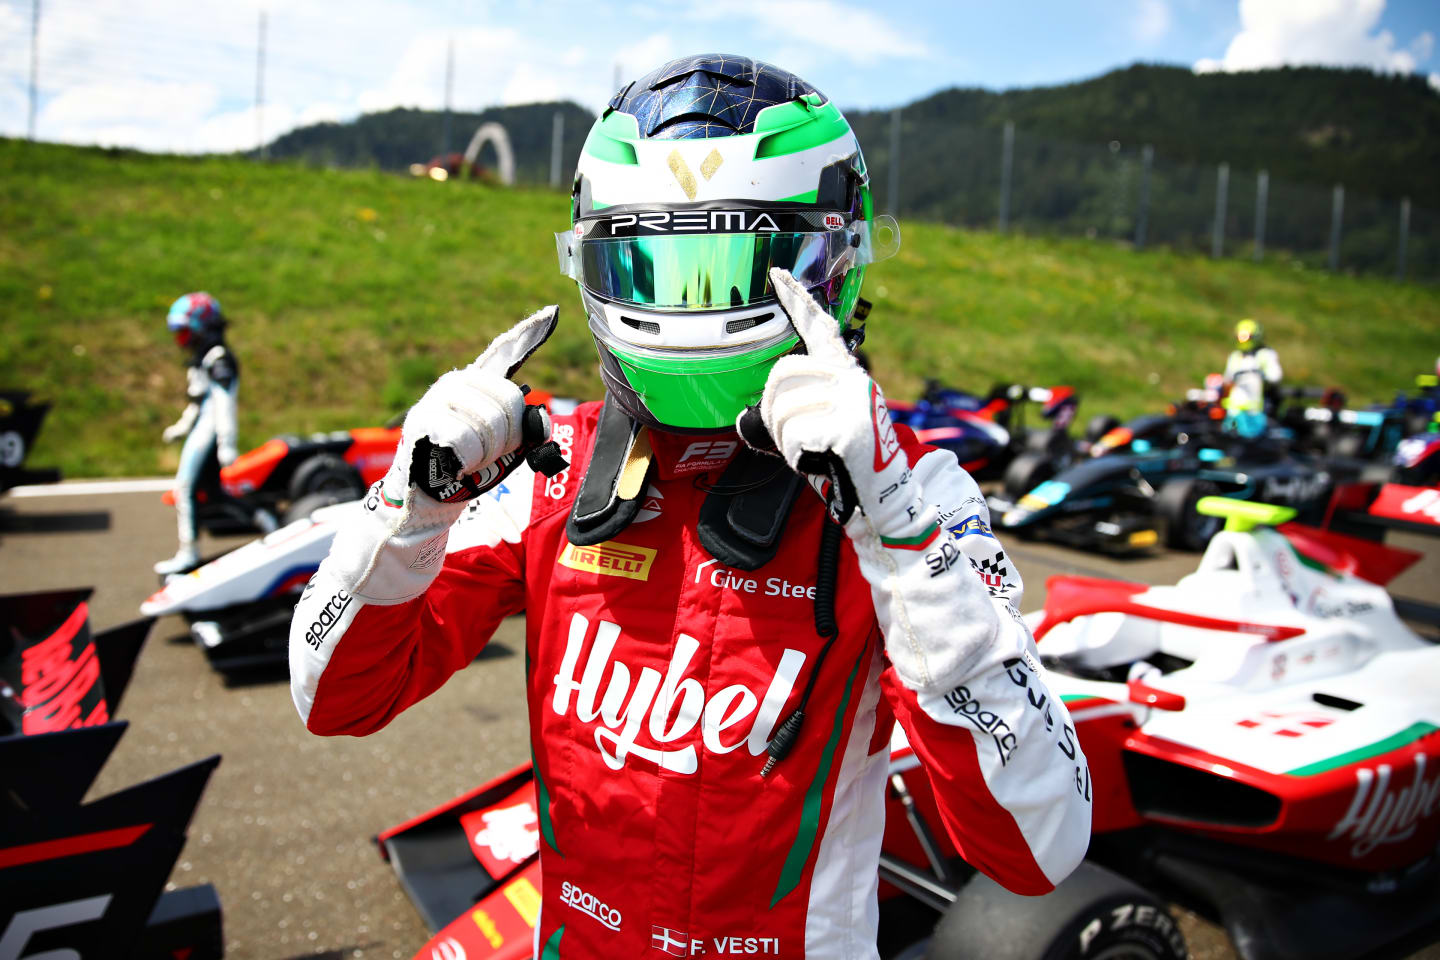 SPIELBERG, AUSTRIA - JULY 10: Frederik Vesti of Denmark and Prema Racing celebrates qualifying on